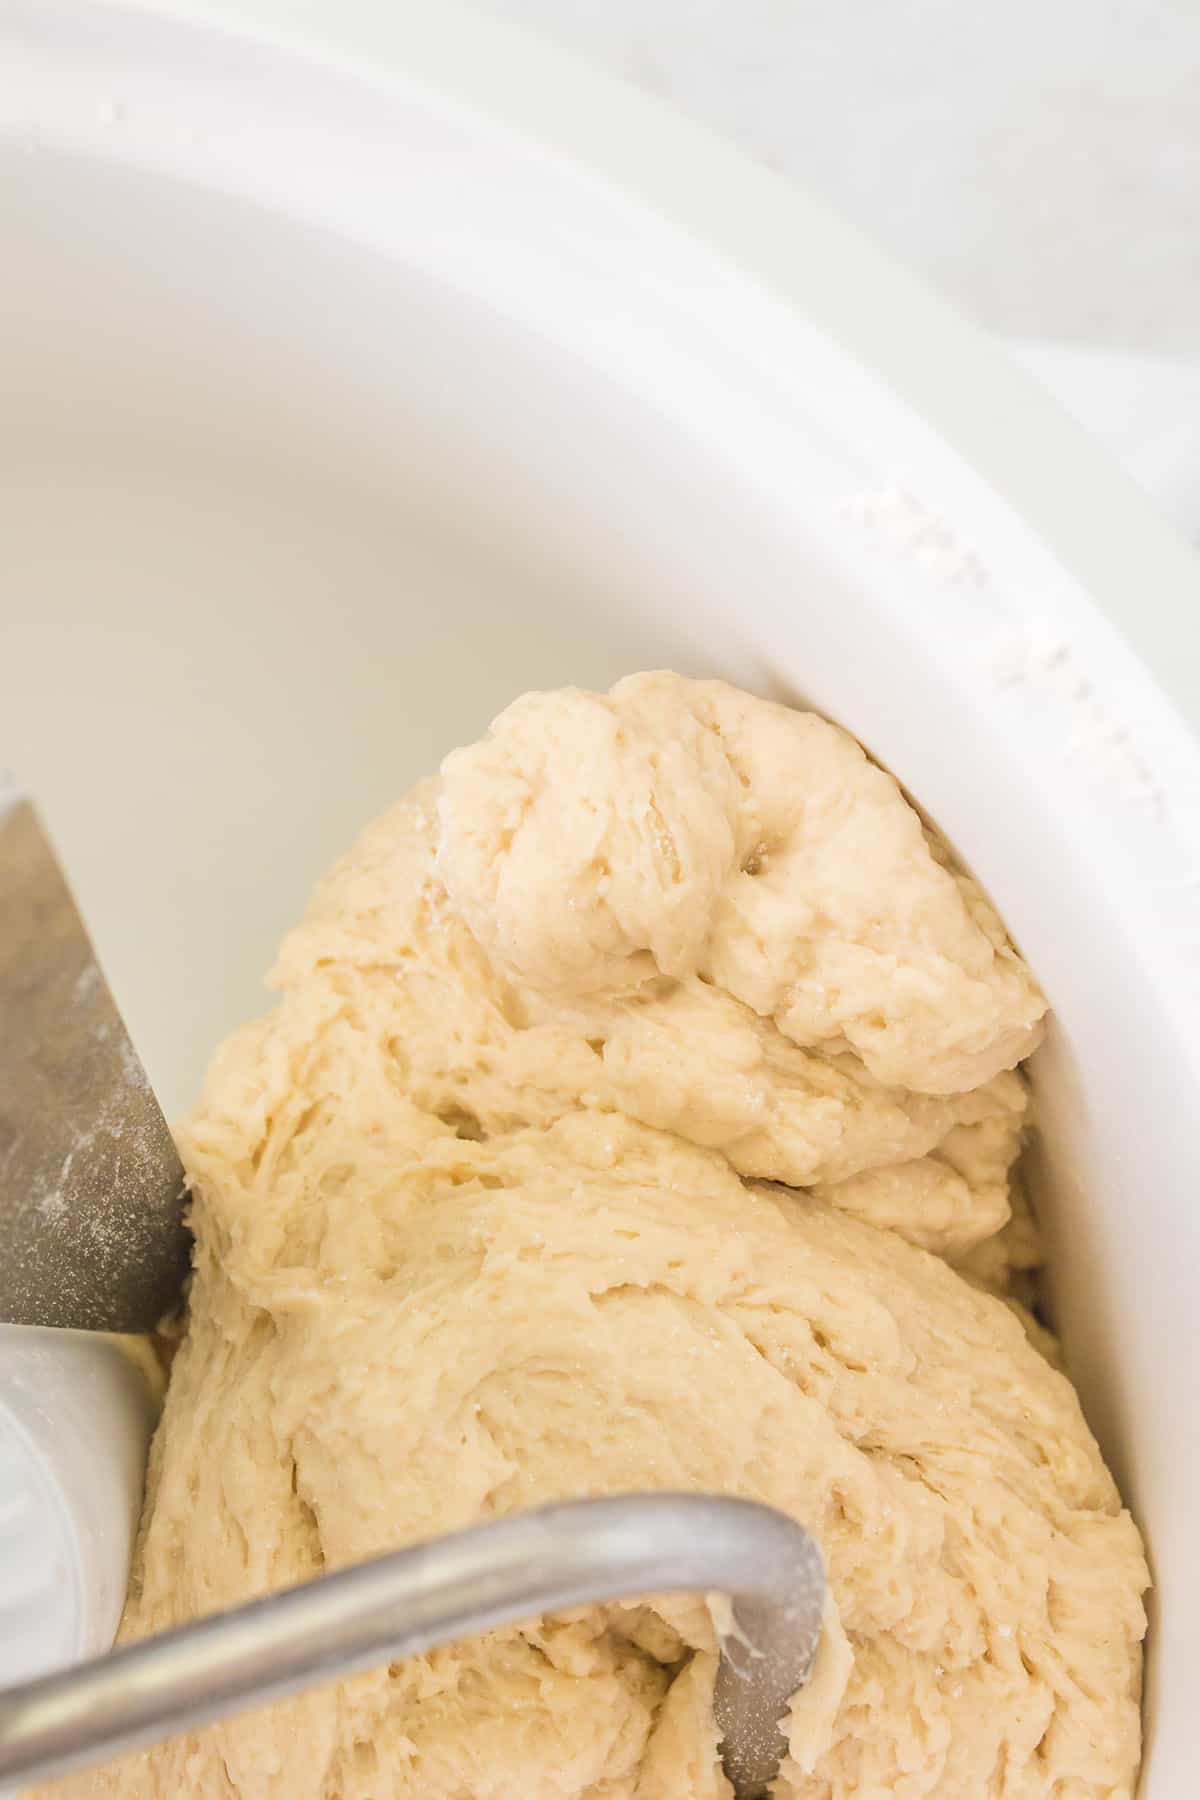 Dough formed into a tacky ball inside the mixer bowl.